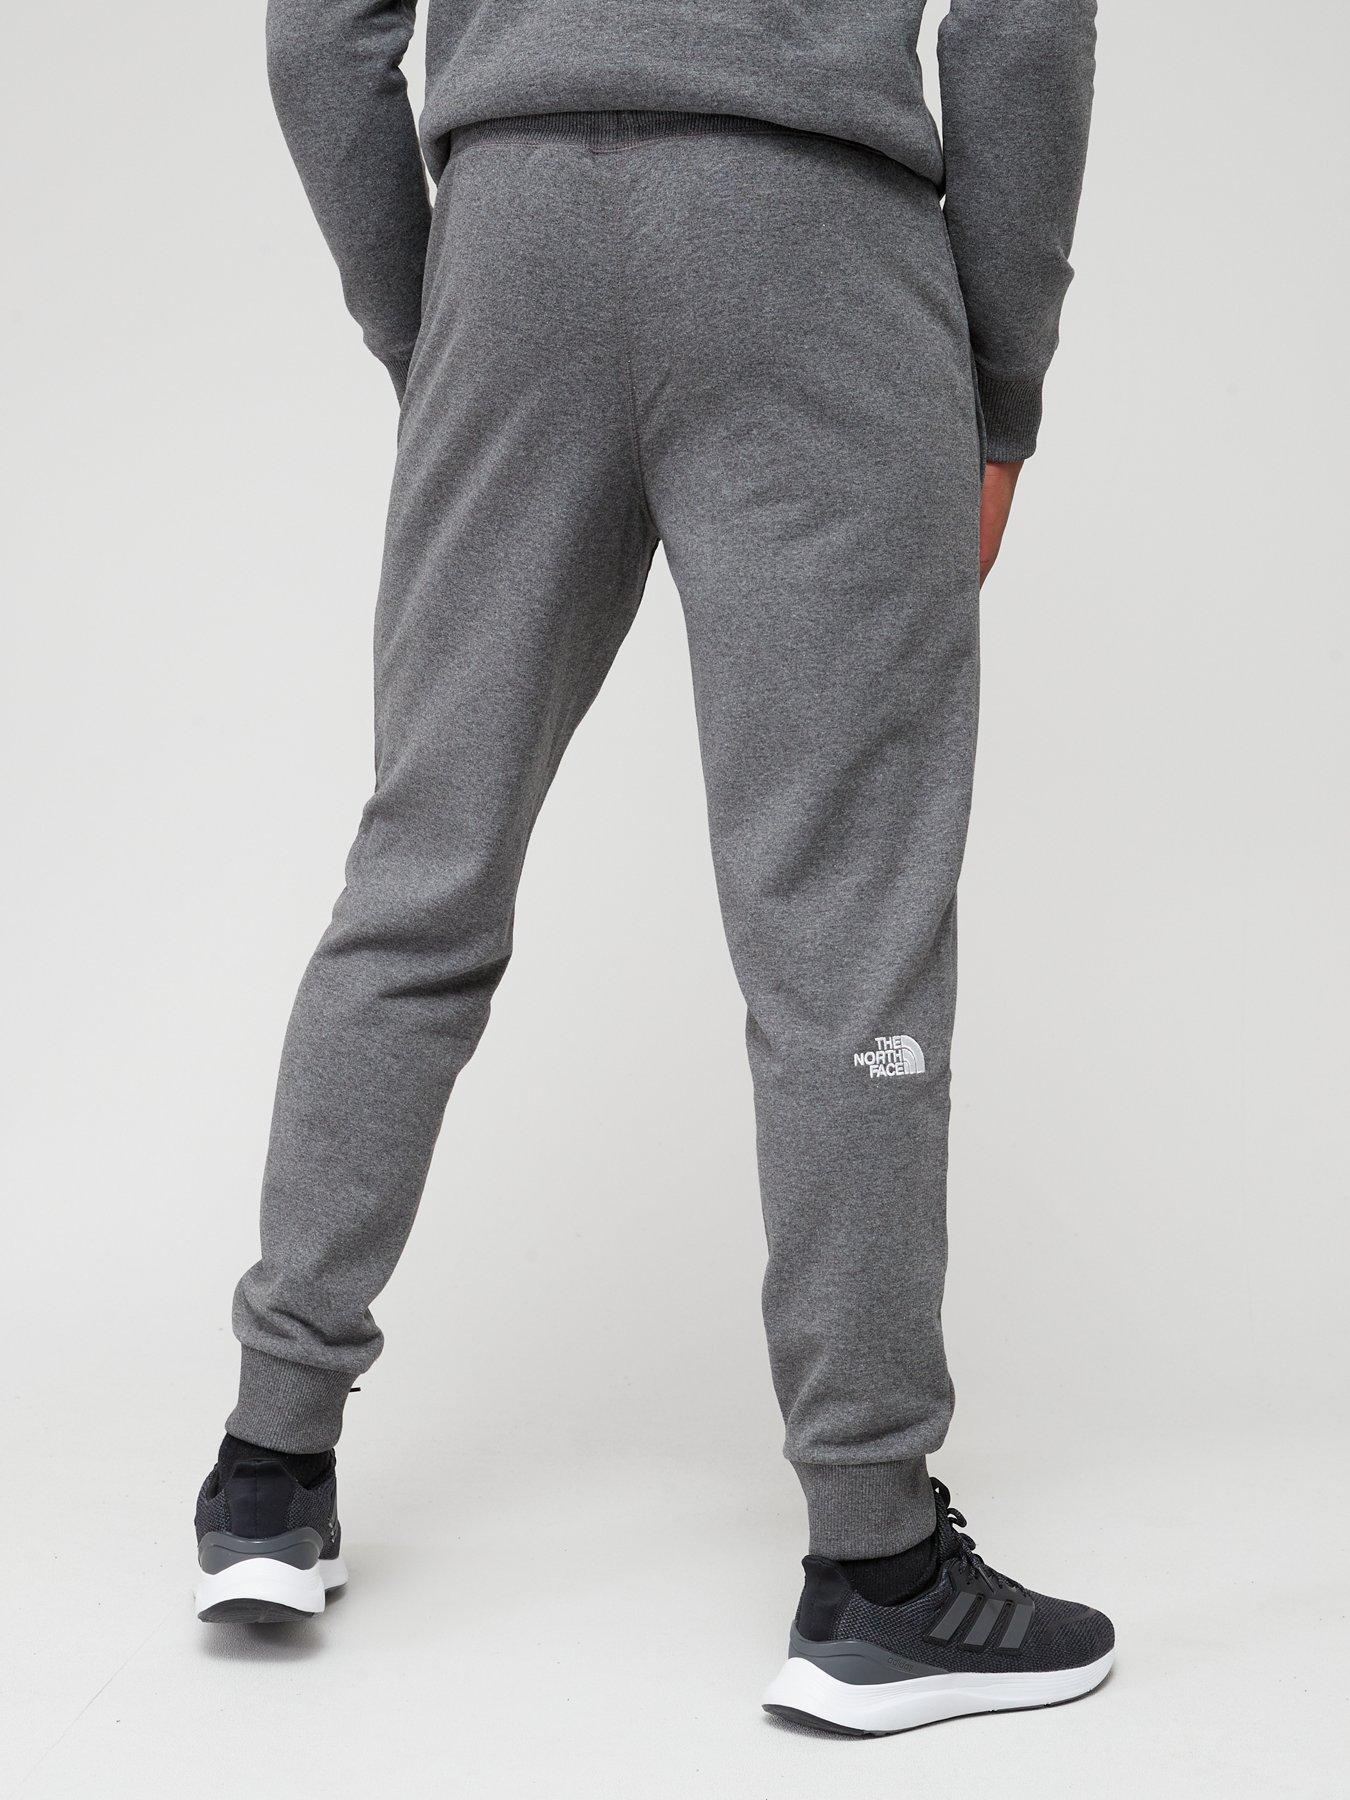 NSE Light Pants - Grey